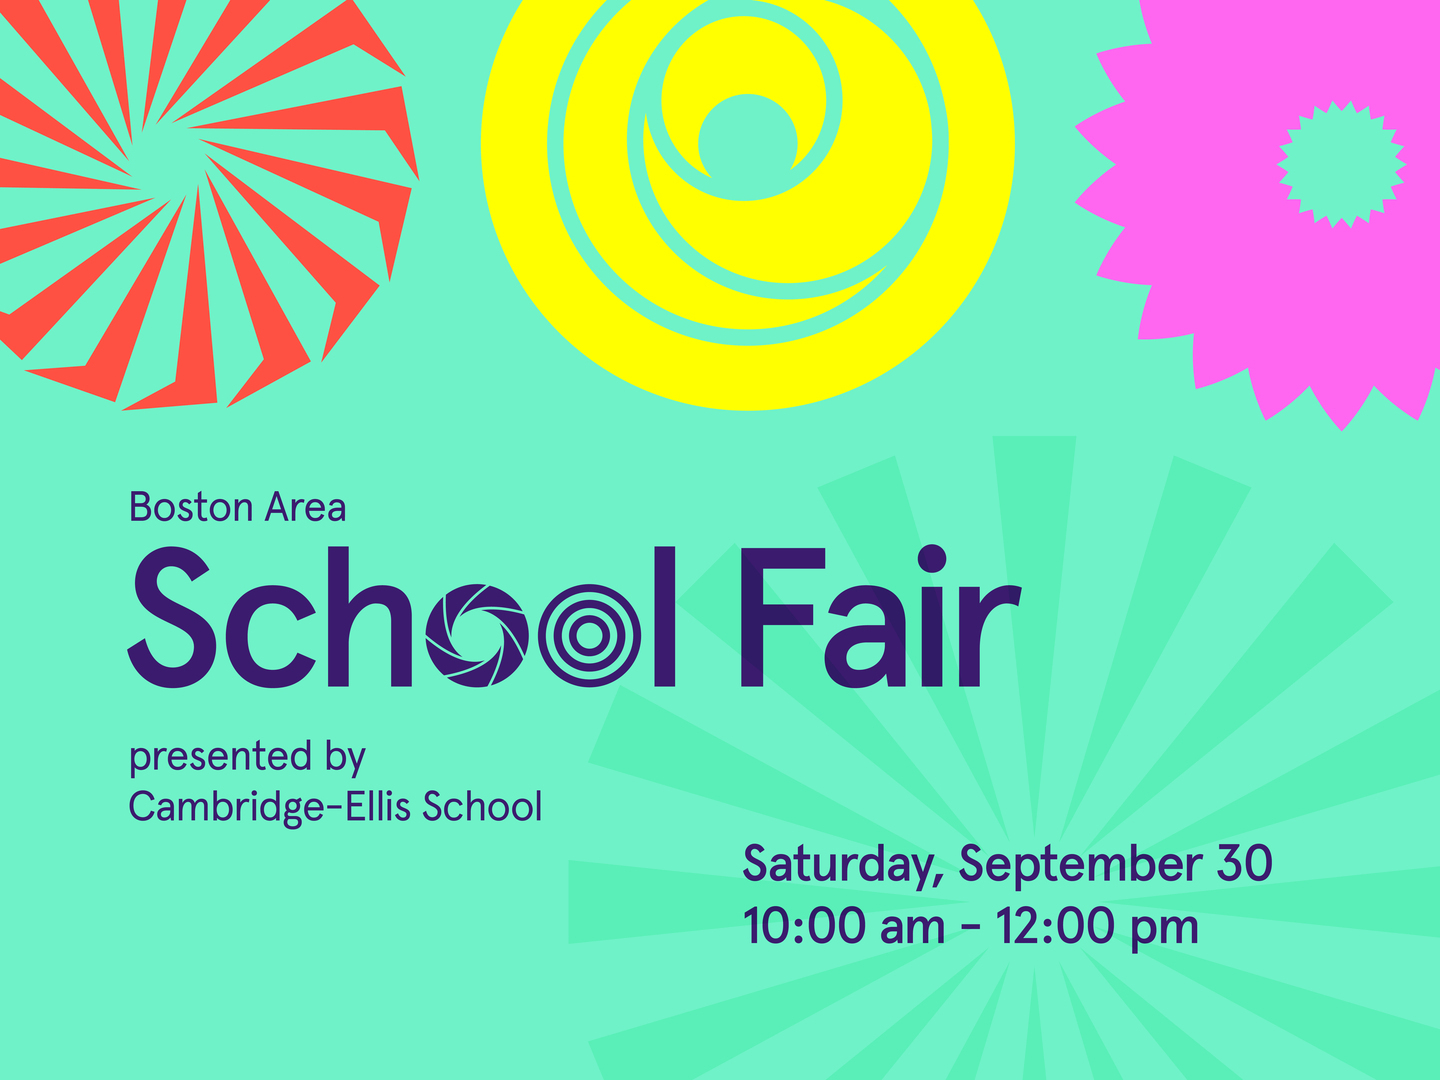 Boston Area School Fair, presented by Cambridge-Ellis School, Cambridge, Massachusetts, United States